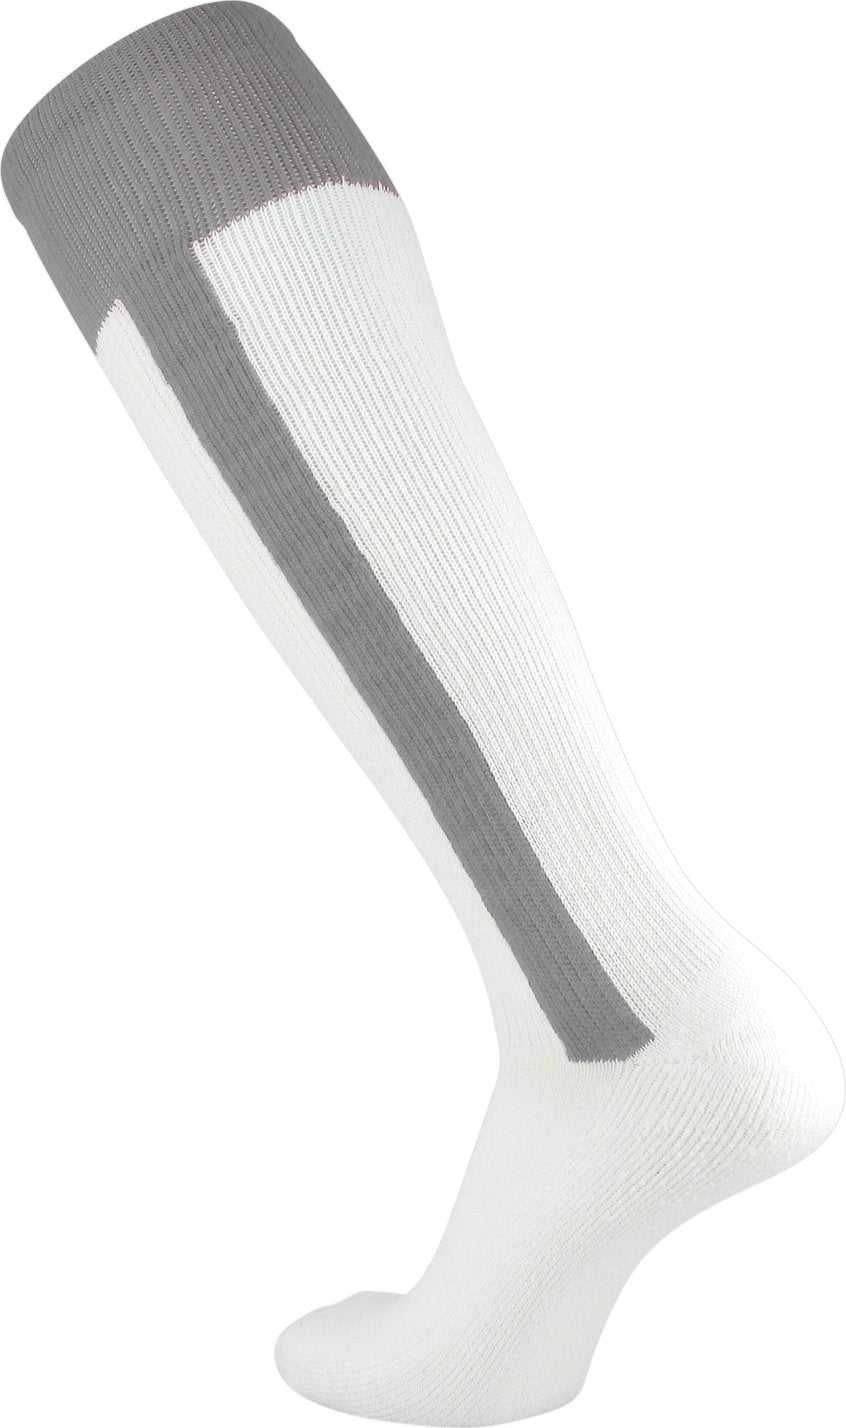 TCK 2-N-1 Premium Knee High Stirrup Socks - Gray White - HIT a Double